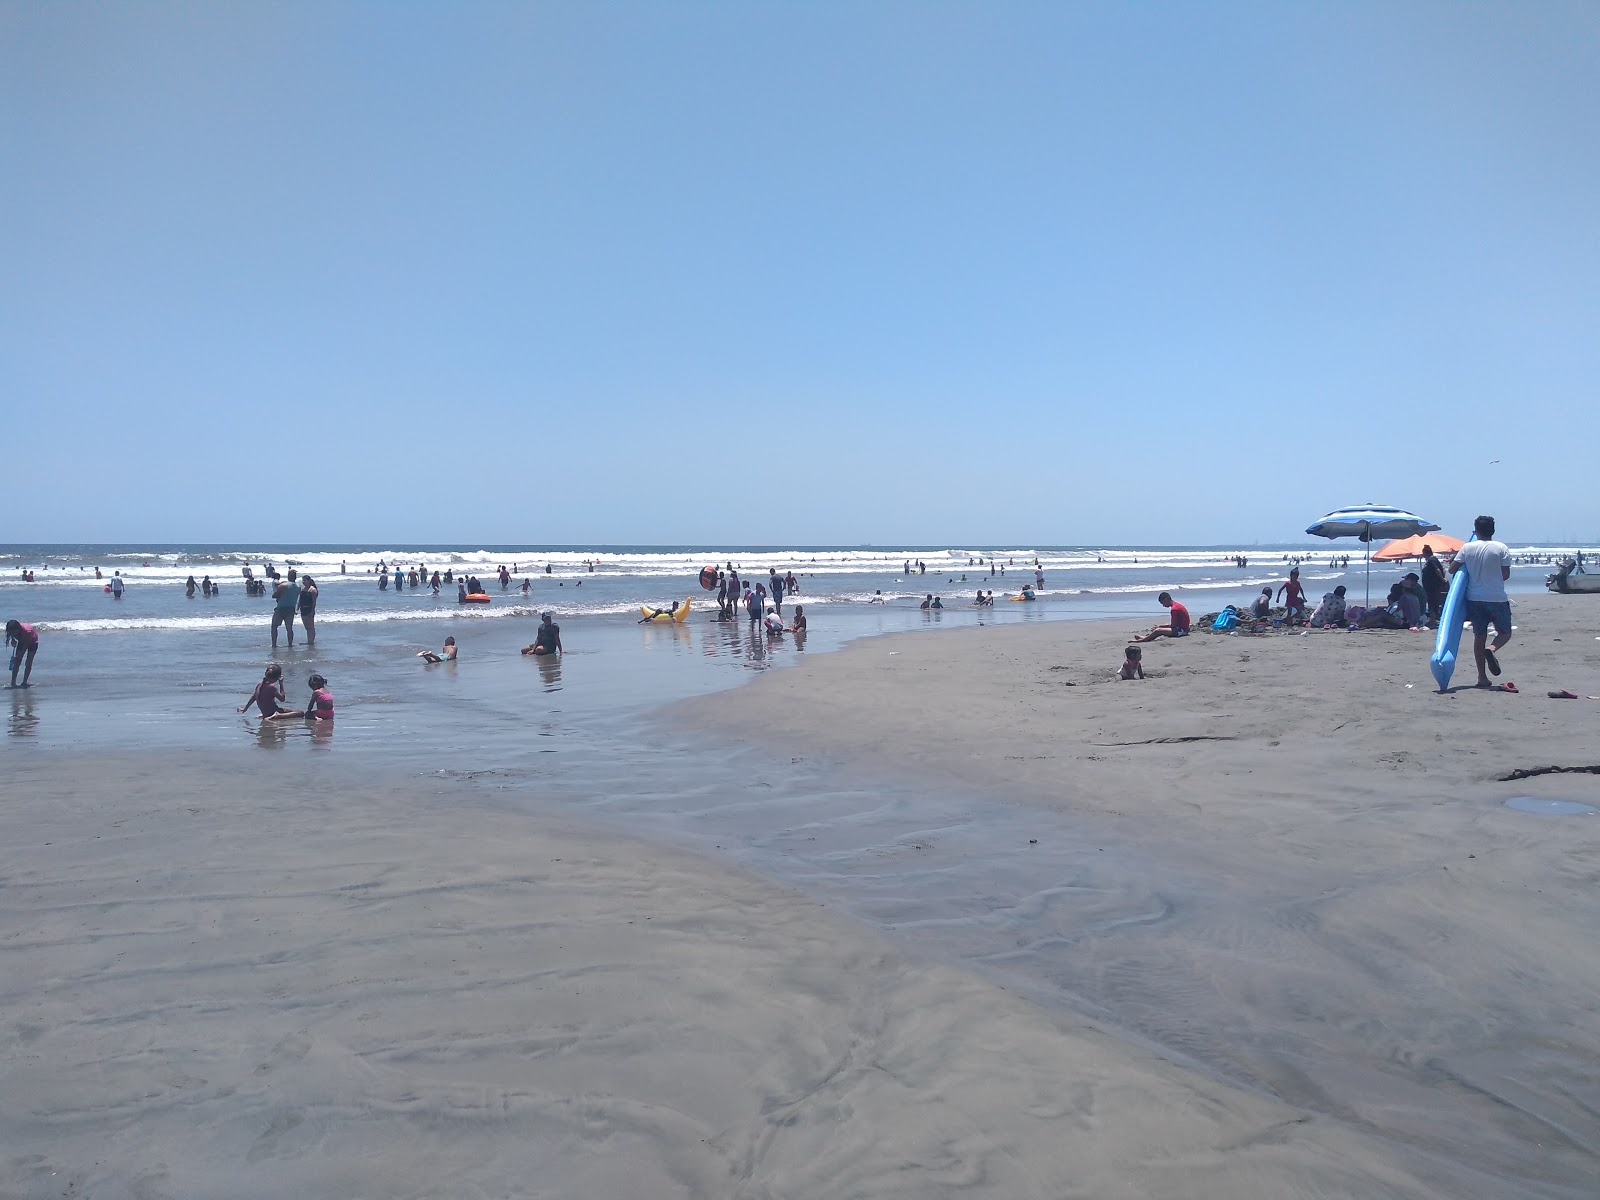 Fotografie cu Playa las Penitas cu o suprafață de nisip maro